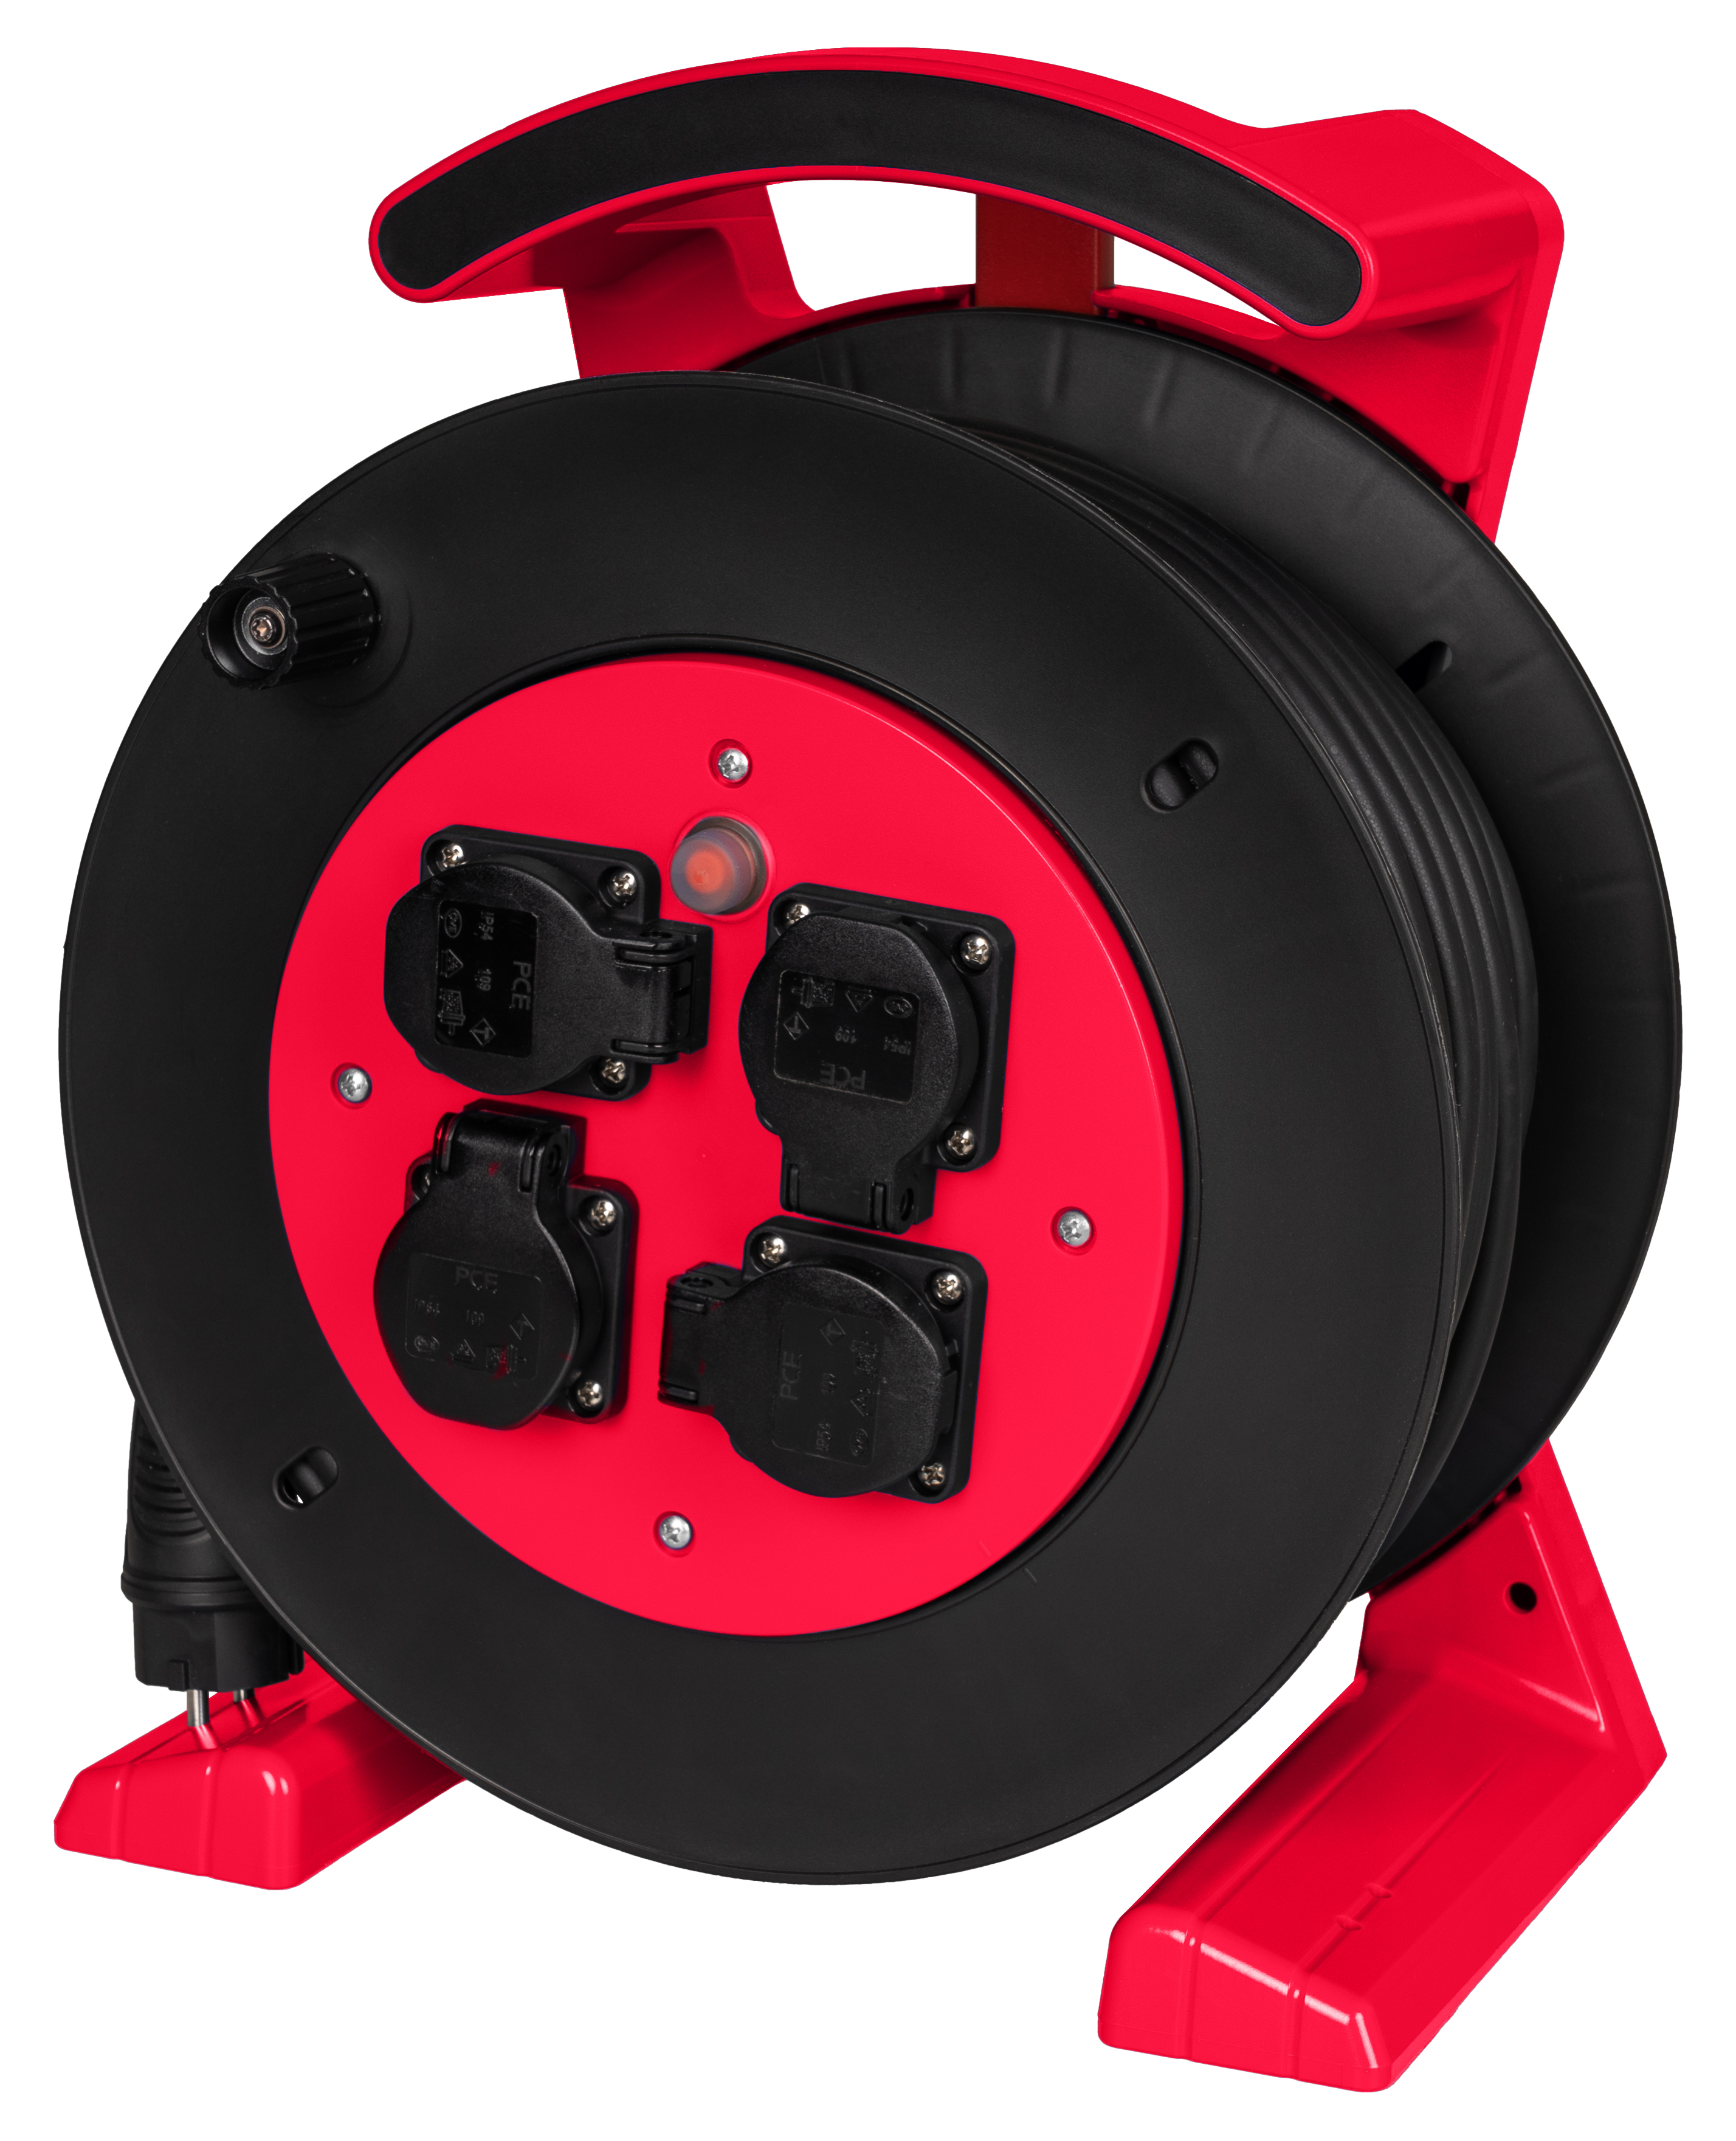 Kabeltrommel rot-schwarz, 4 x Schutzkontakt-Steckdose, H07RN-F 3 G 1,5 mm², 40 m JUMBO L 2.0